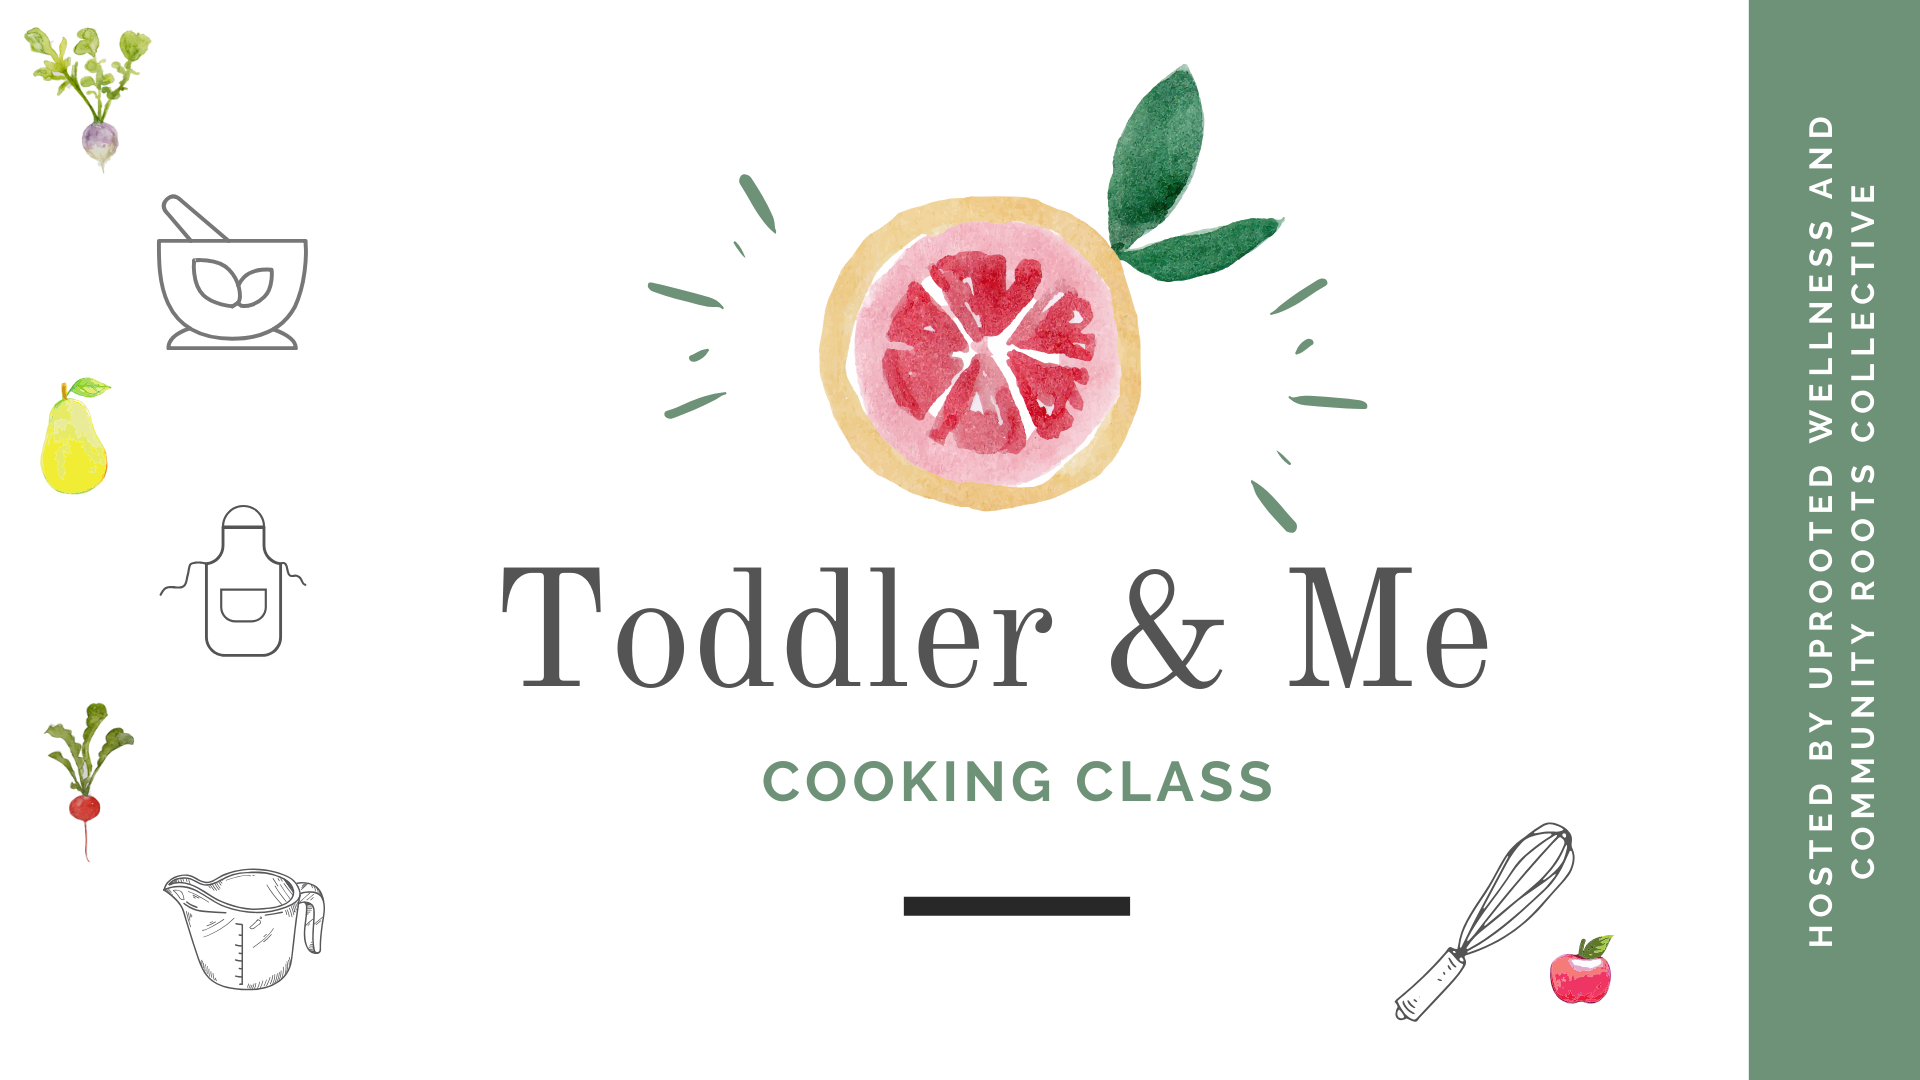 Toddler & Me Cooking Class